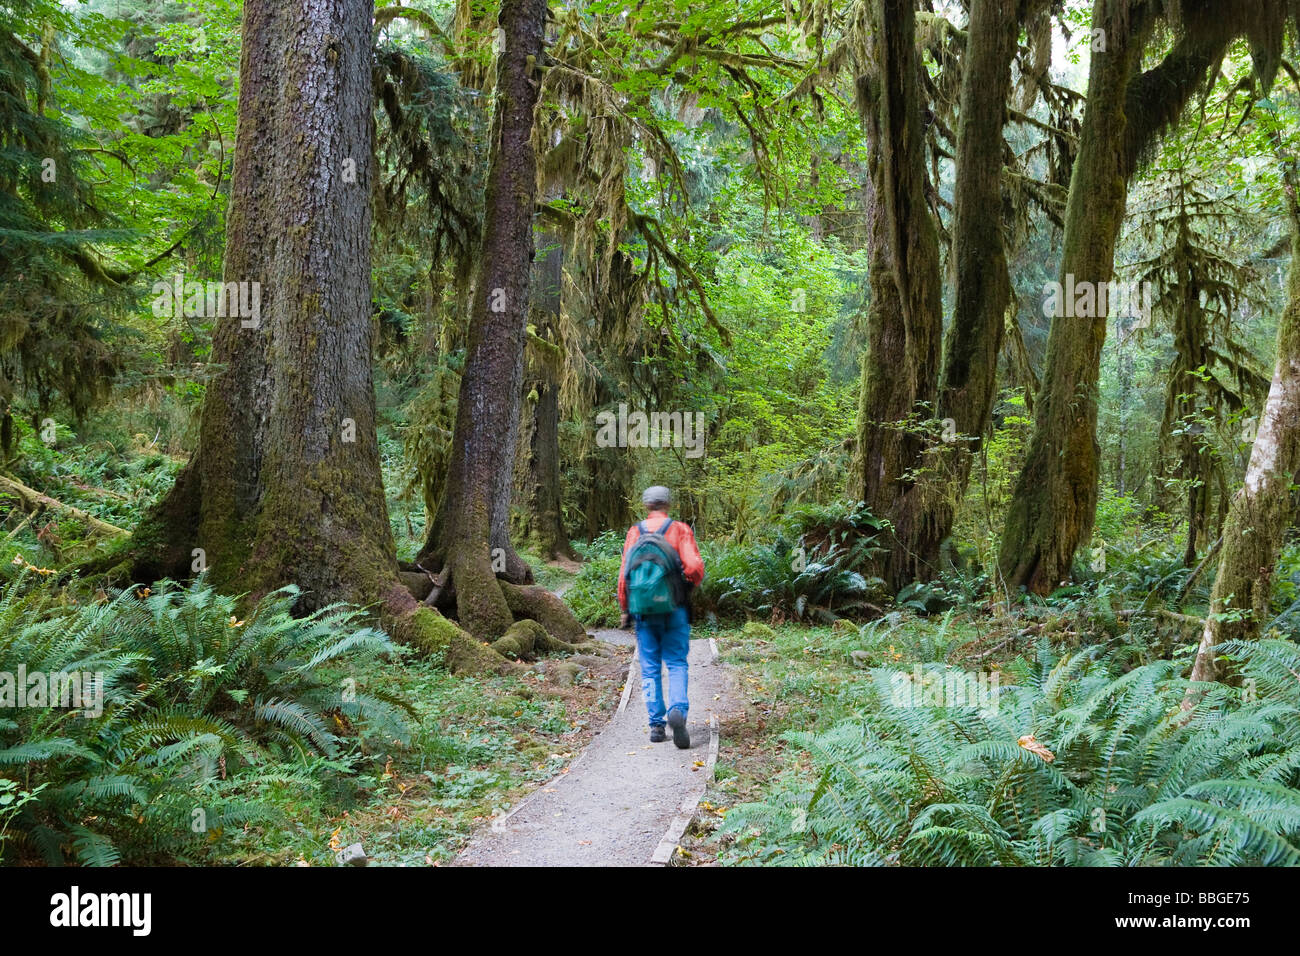 Rainforest, Hoh Rainforest, Olympic National Park, Washington, USA Stock Photo